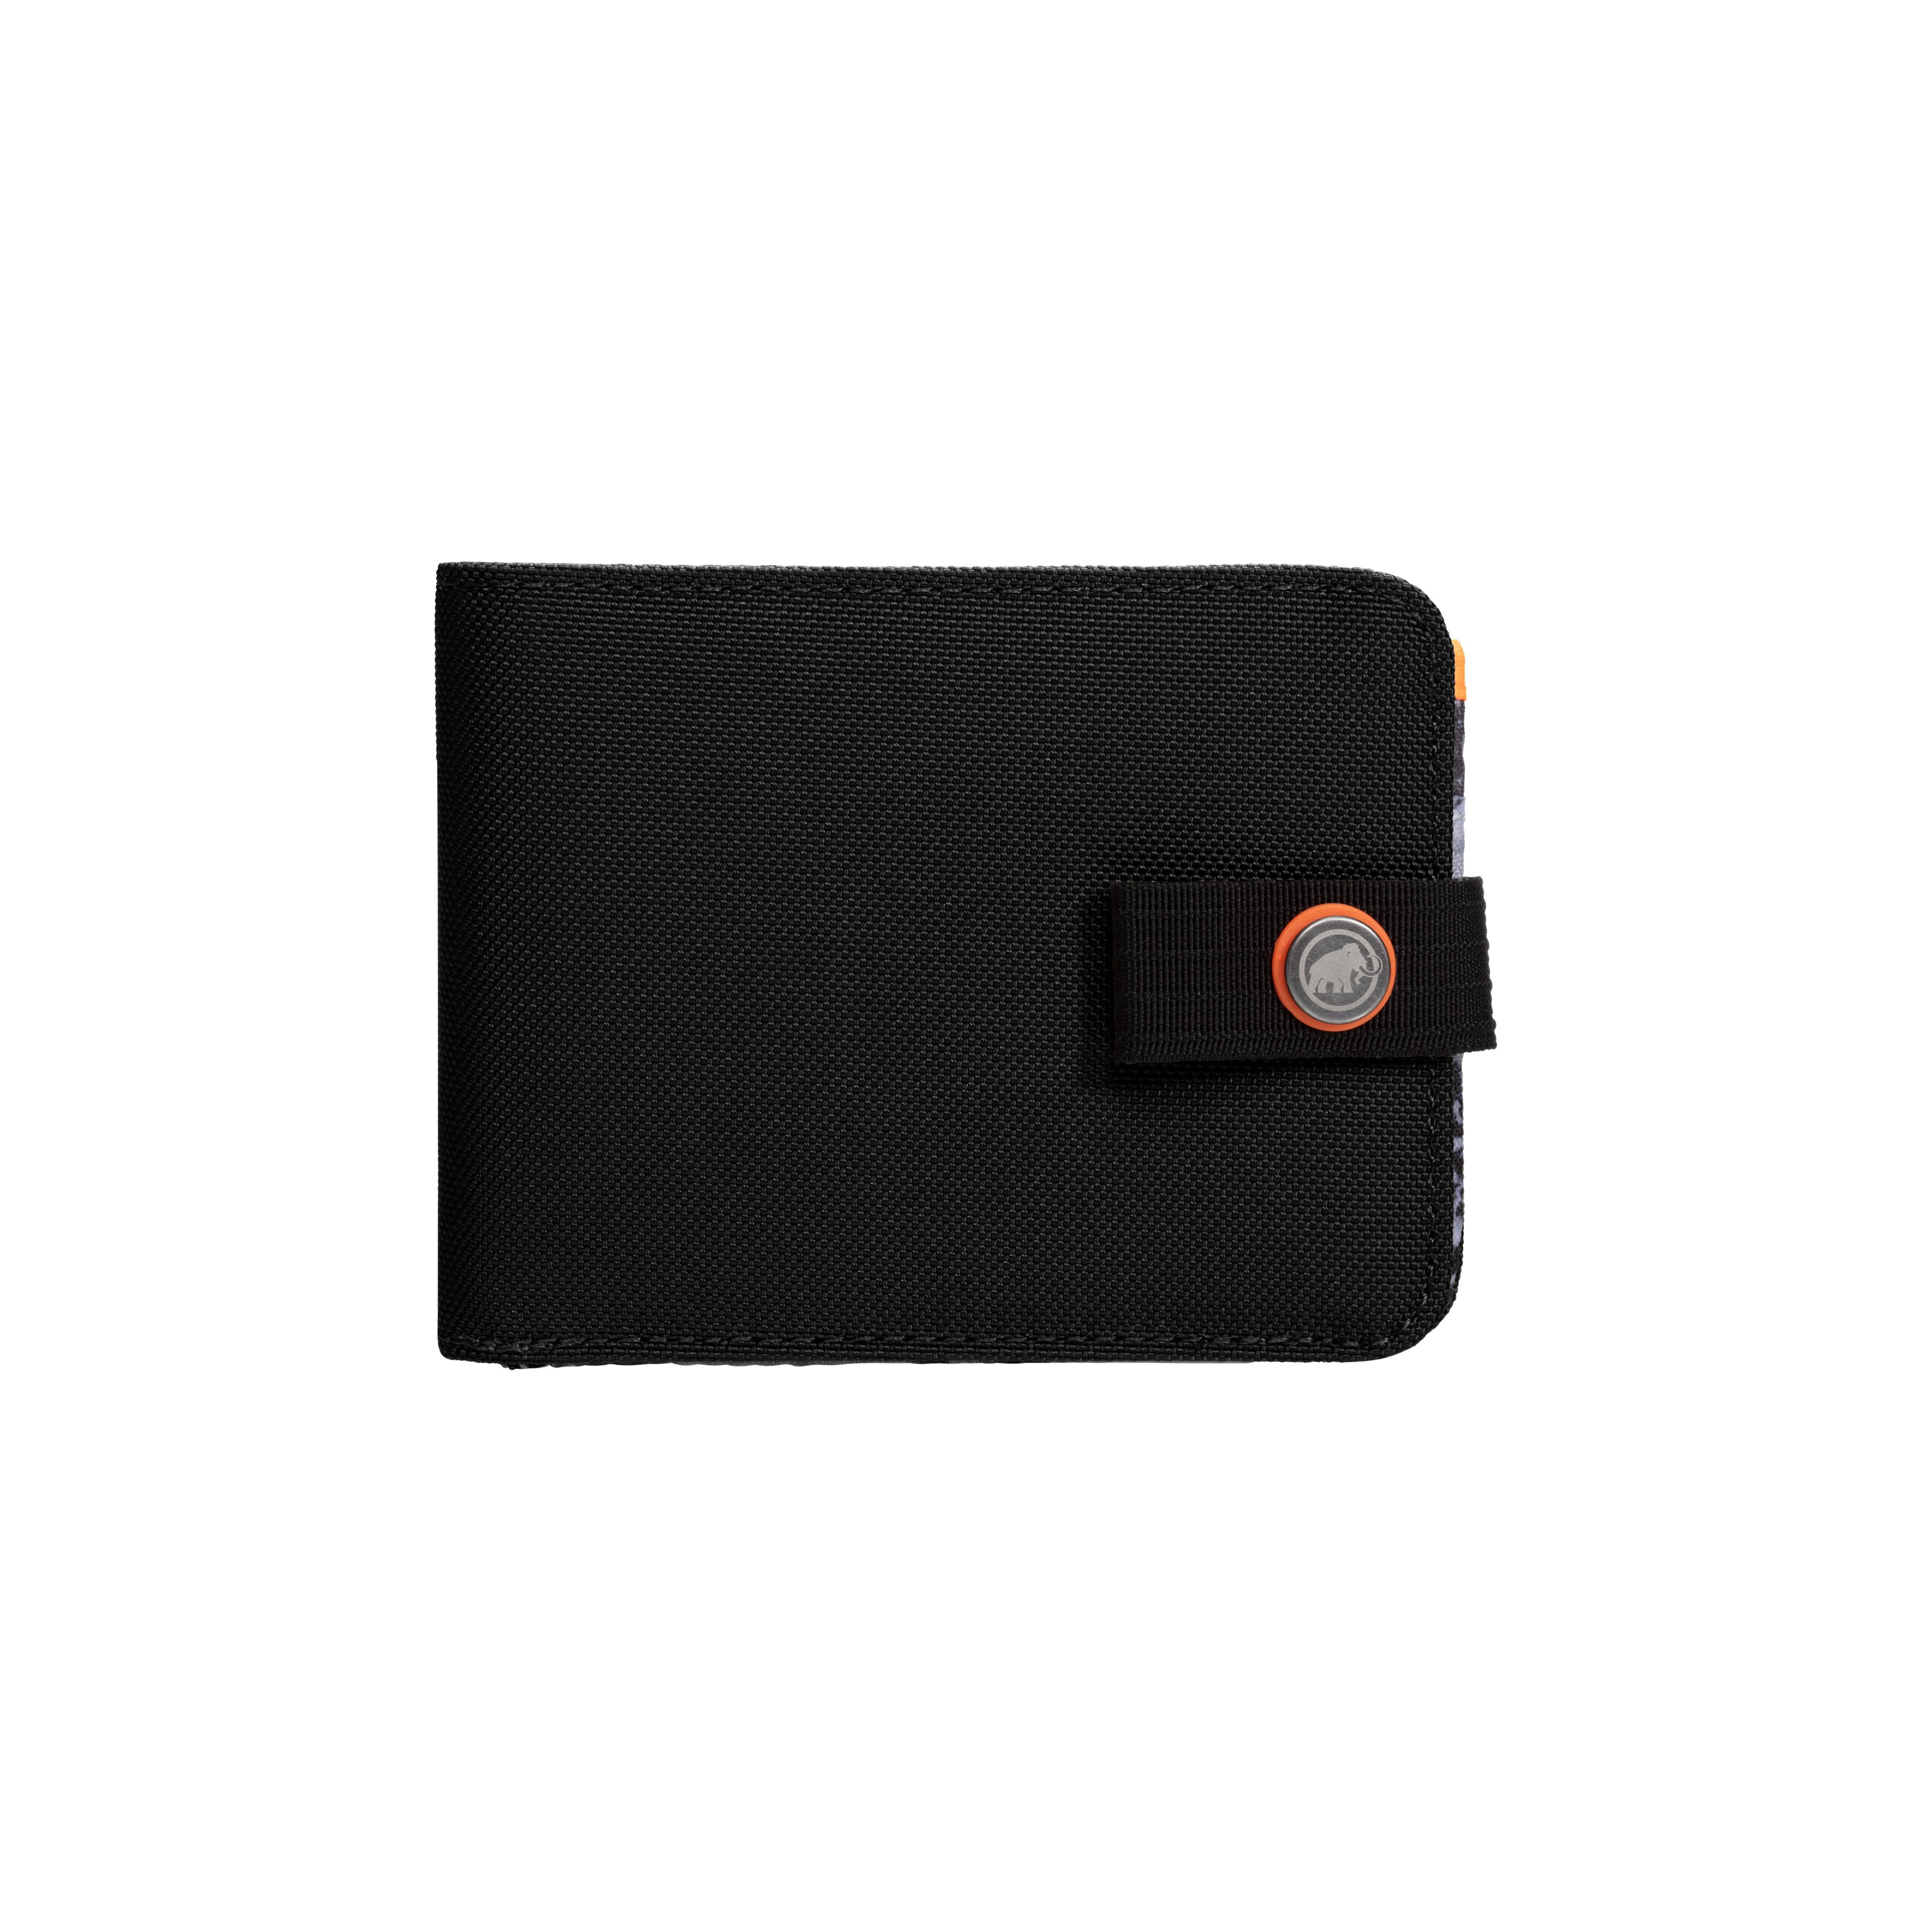 Xeron Wallet - black, one size product image